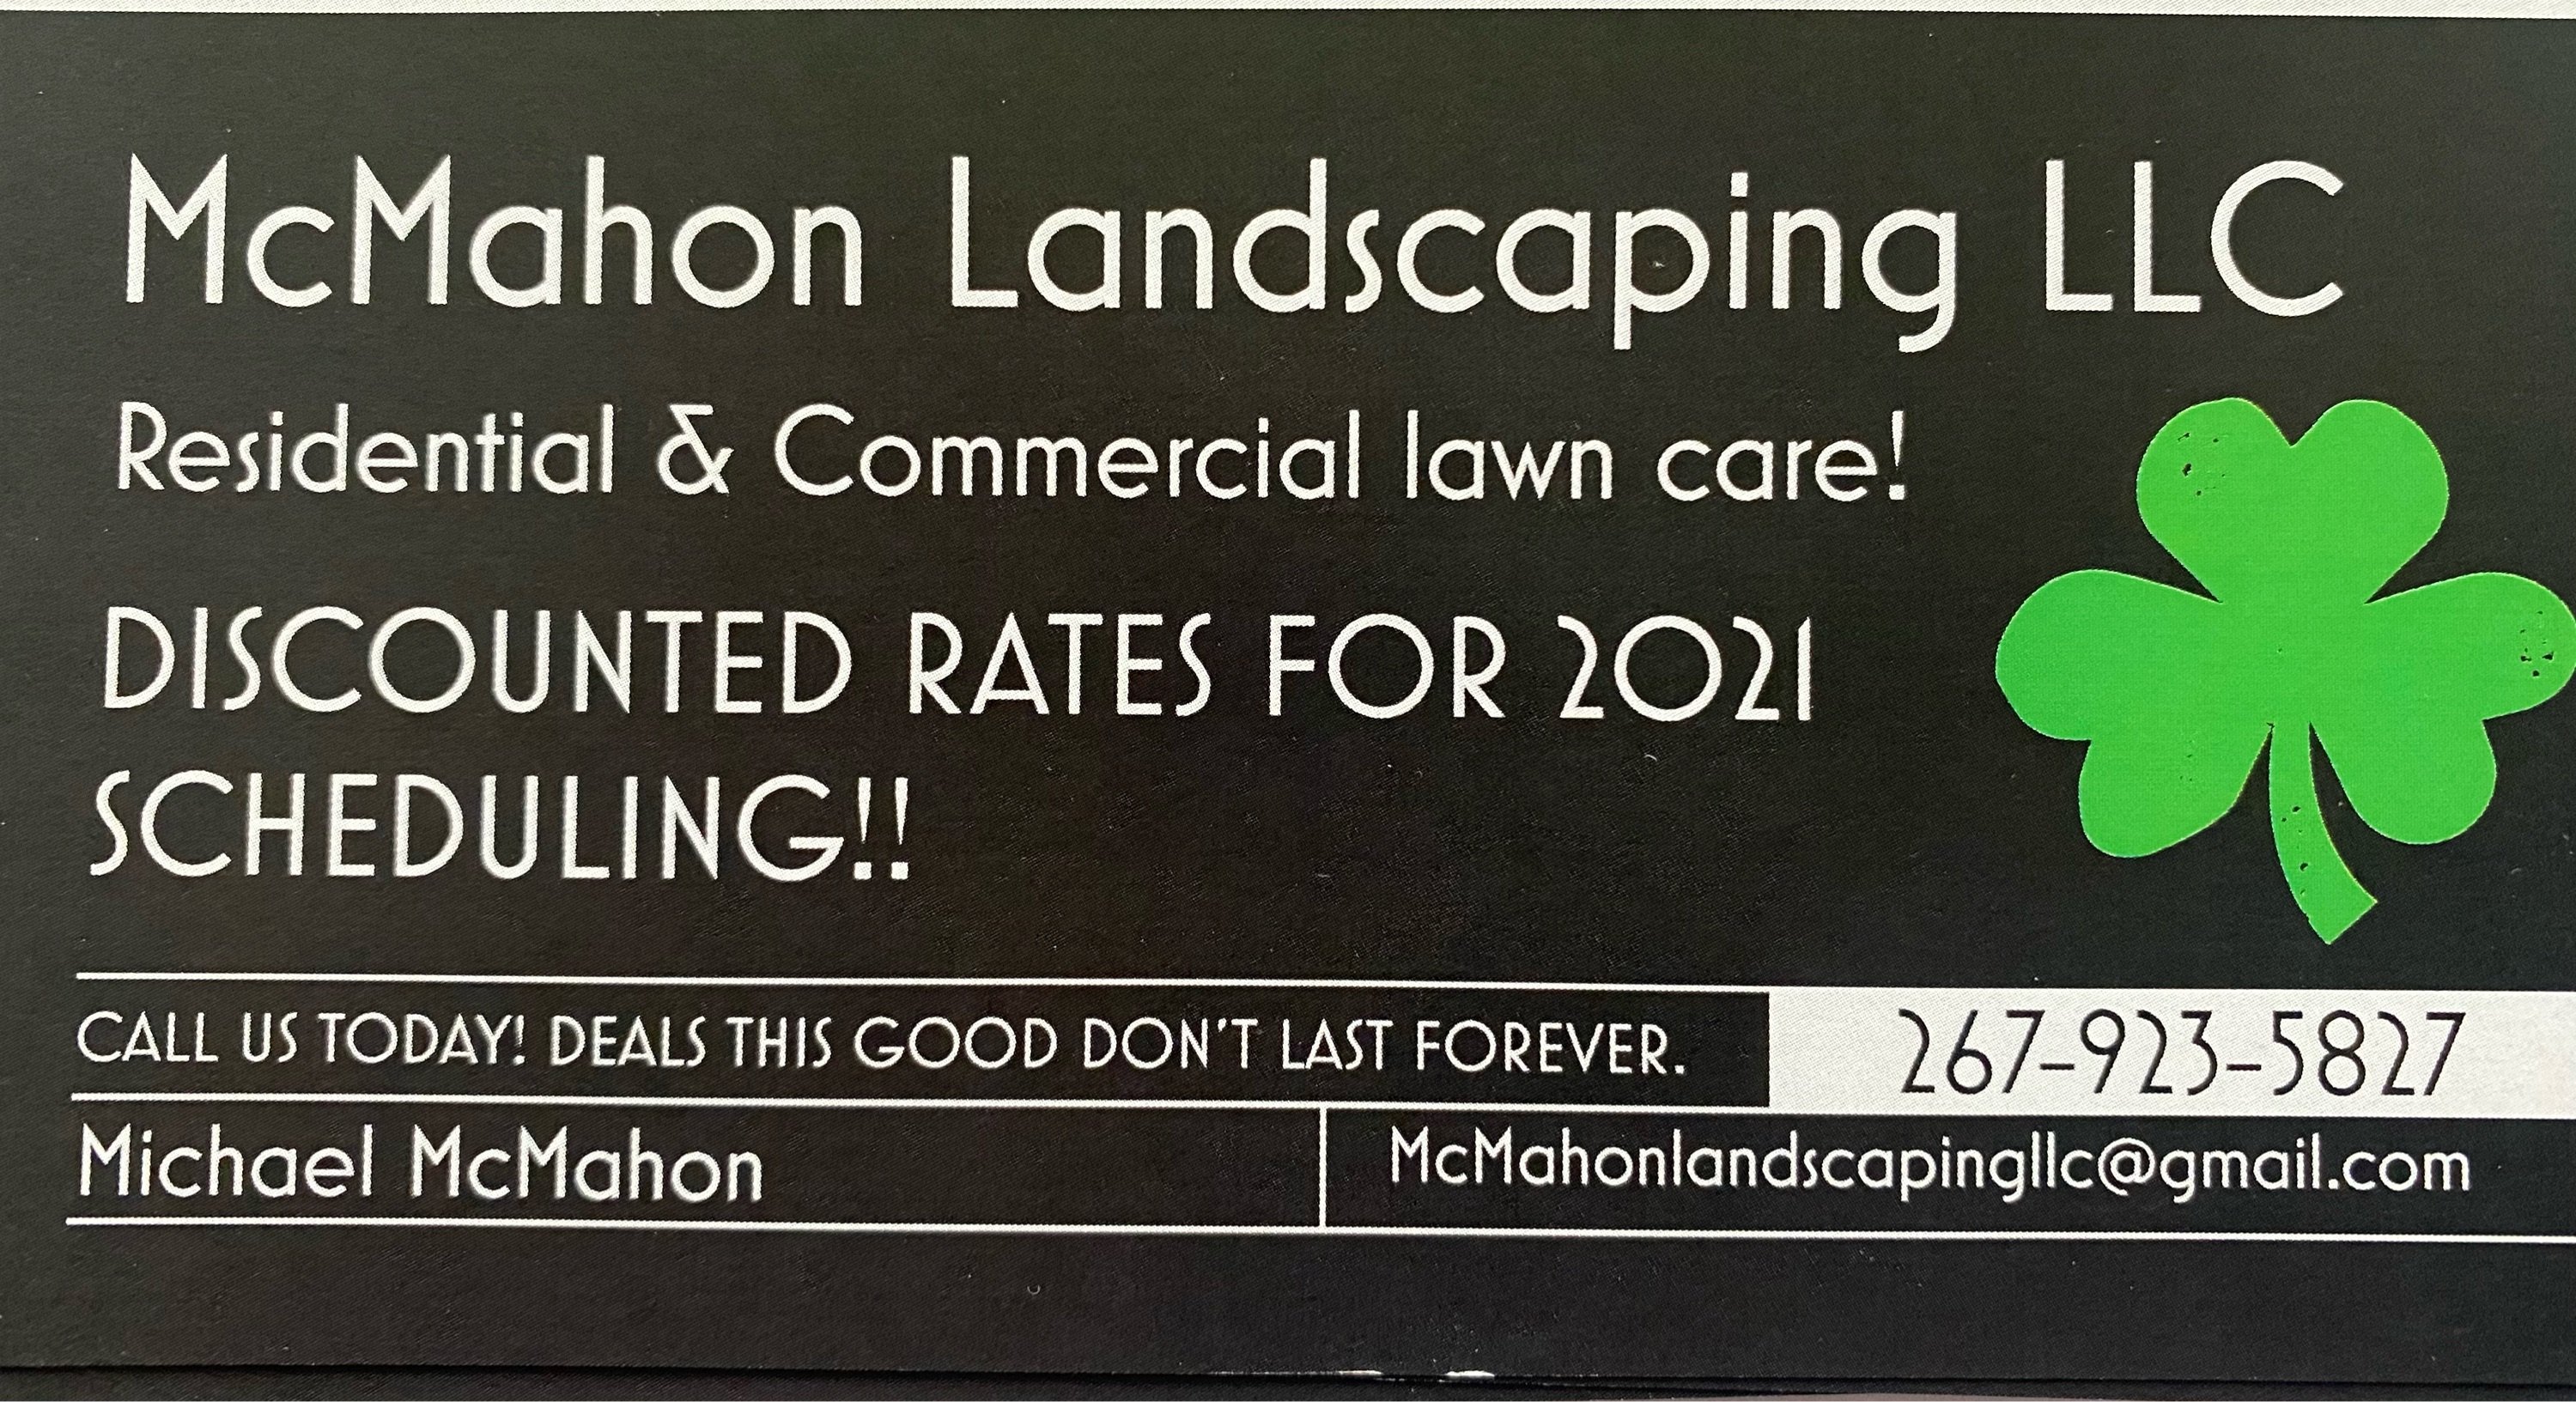 McMahon Landscaping LLC. - Ana Sayfa  Facebook Logo